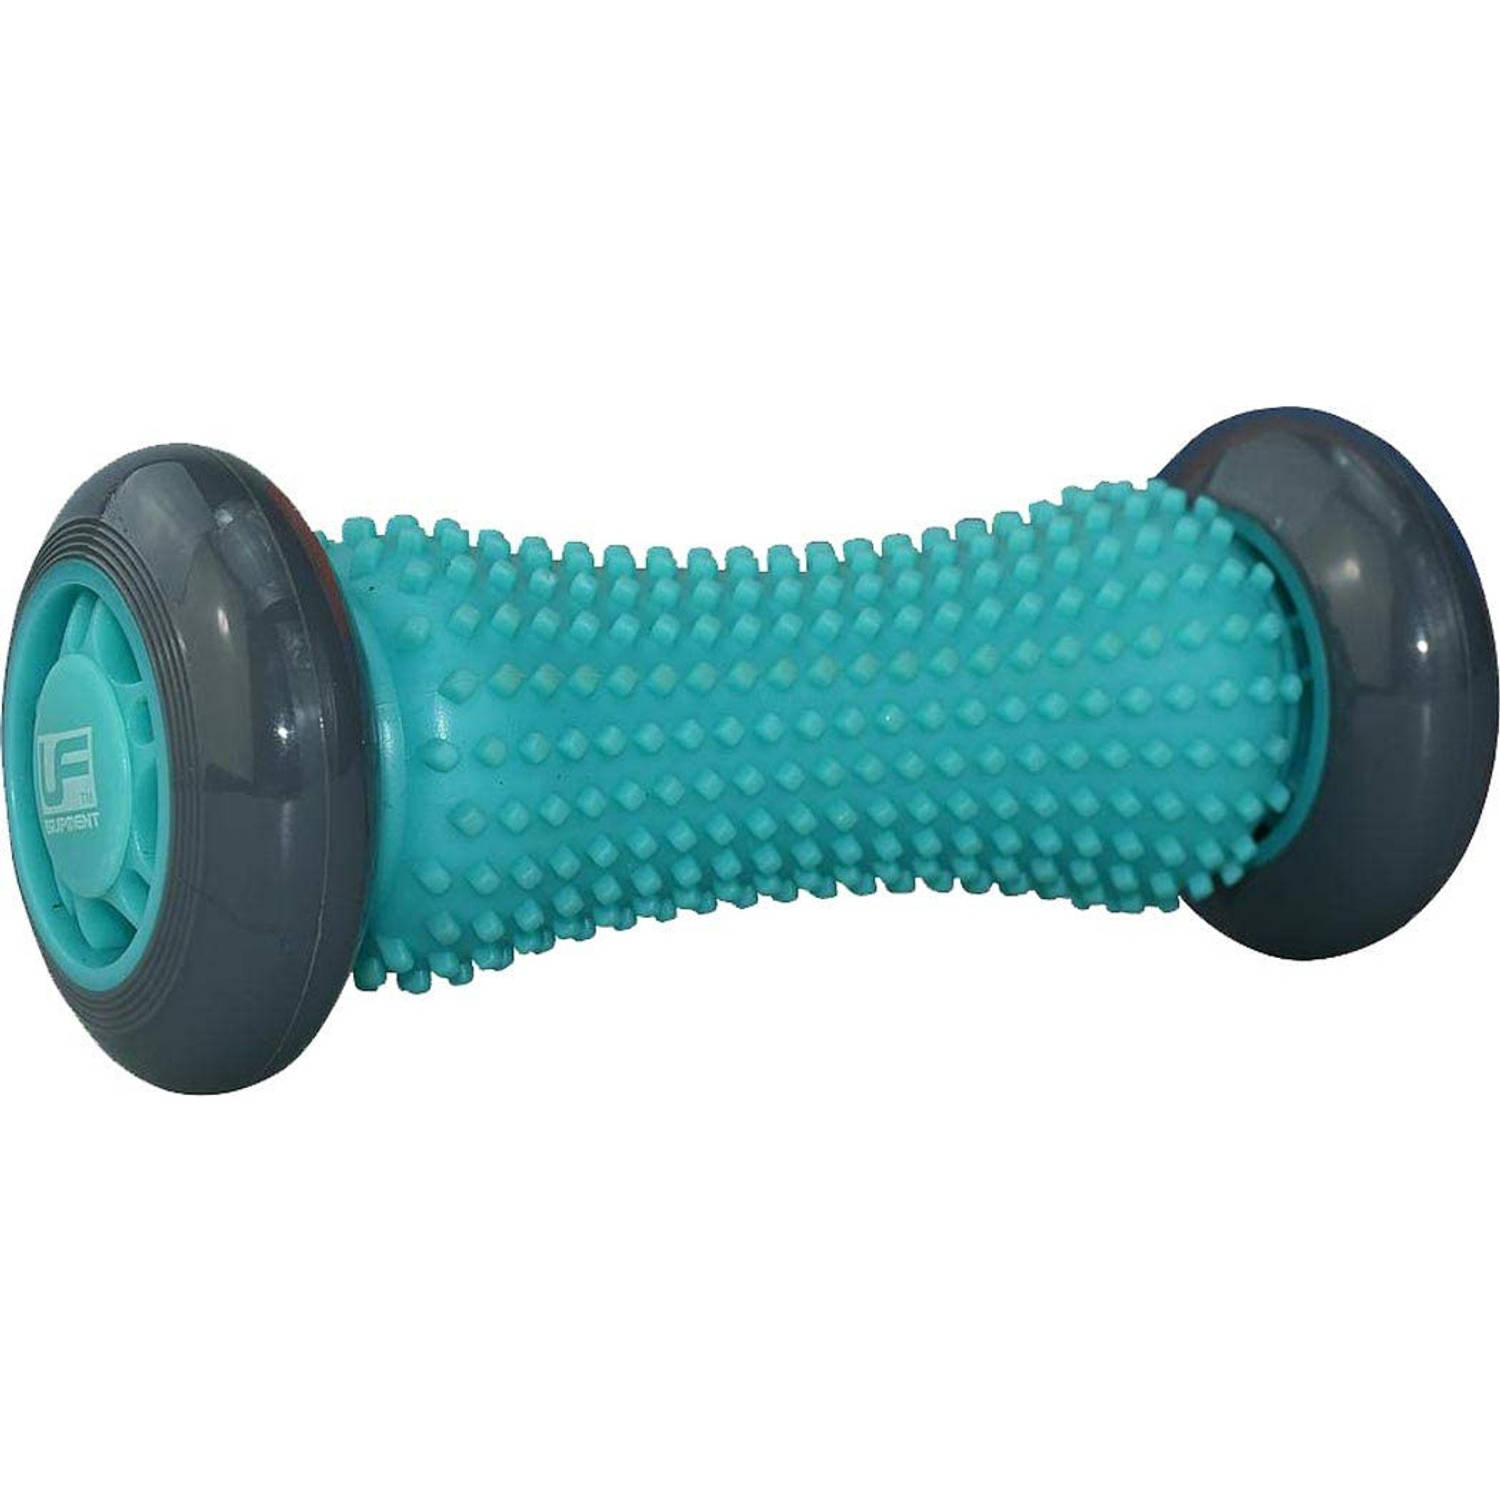 Urban Fitness Foamroller Foot Massage Turquoise